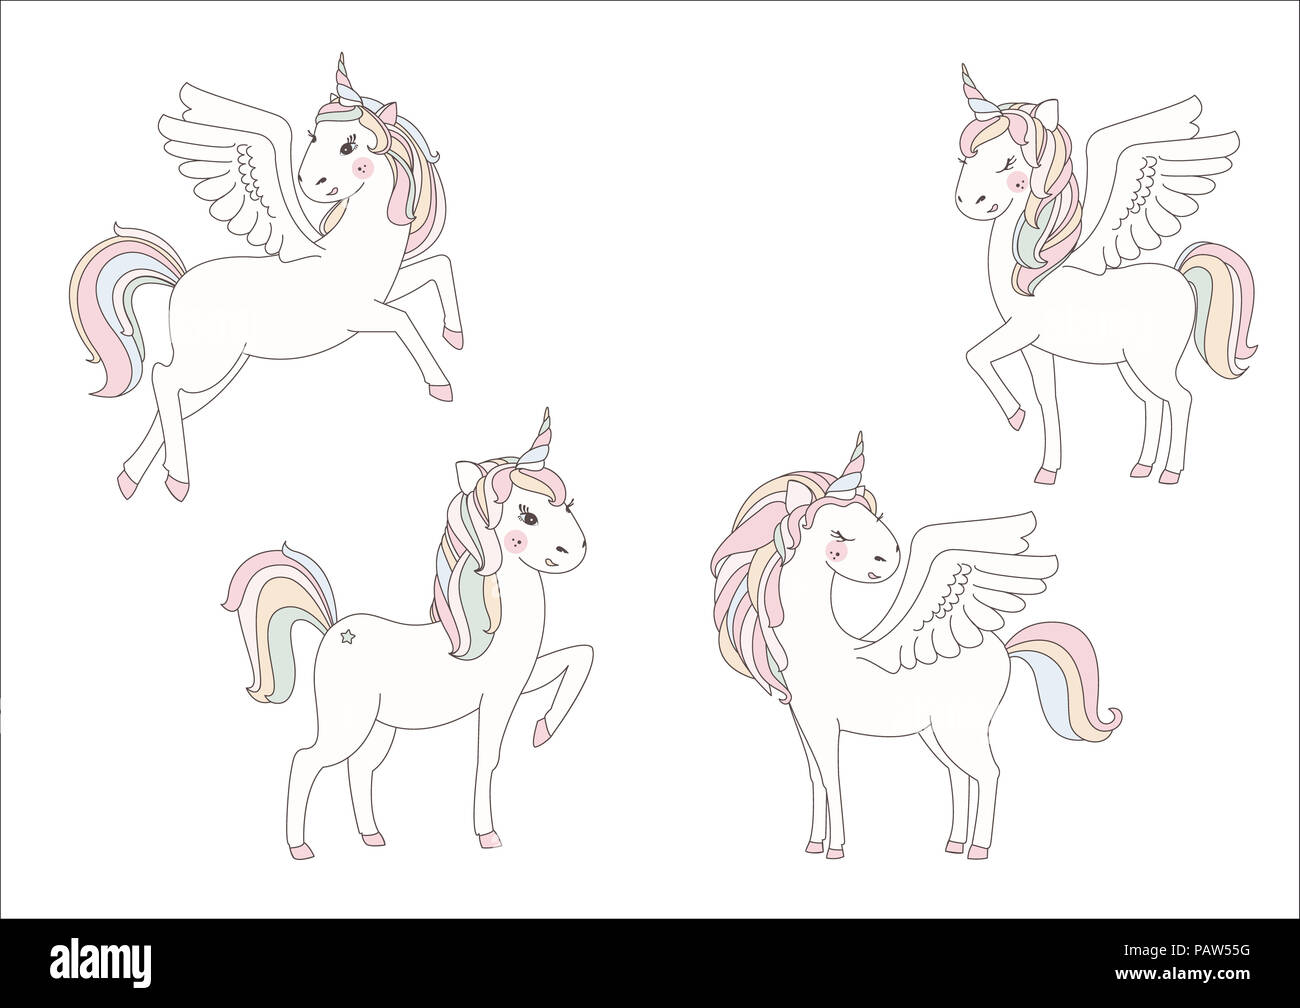 https://c8.alamy.com/comp/PAW55G/unicorn-sweet-cute-illustration-magic-fantasy-design-cartoon-rainbow-animal-isolated-horse-fairytale-unicorn-print-poster-PAW55G.jpg